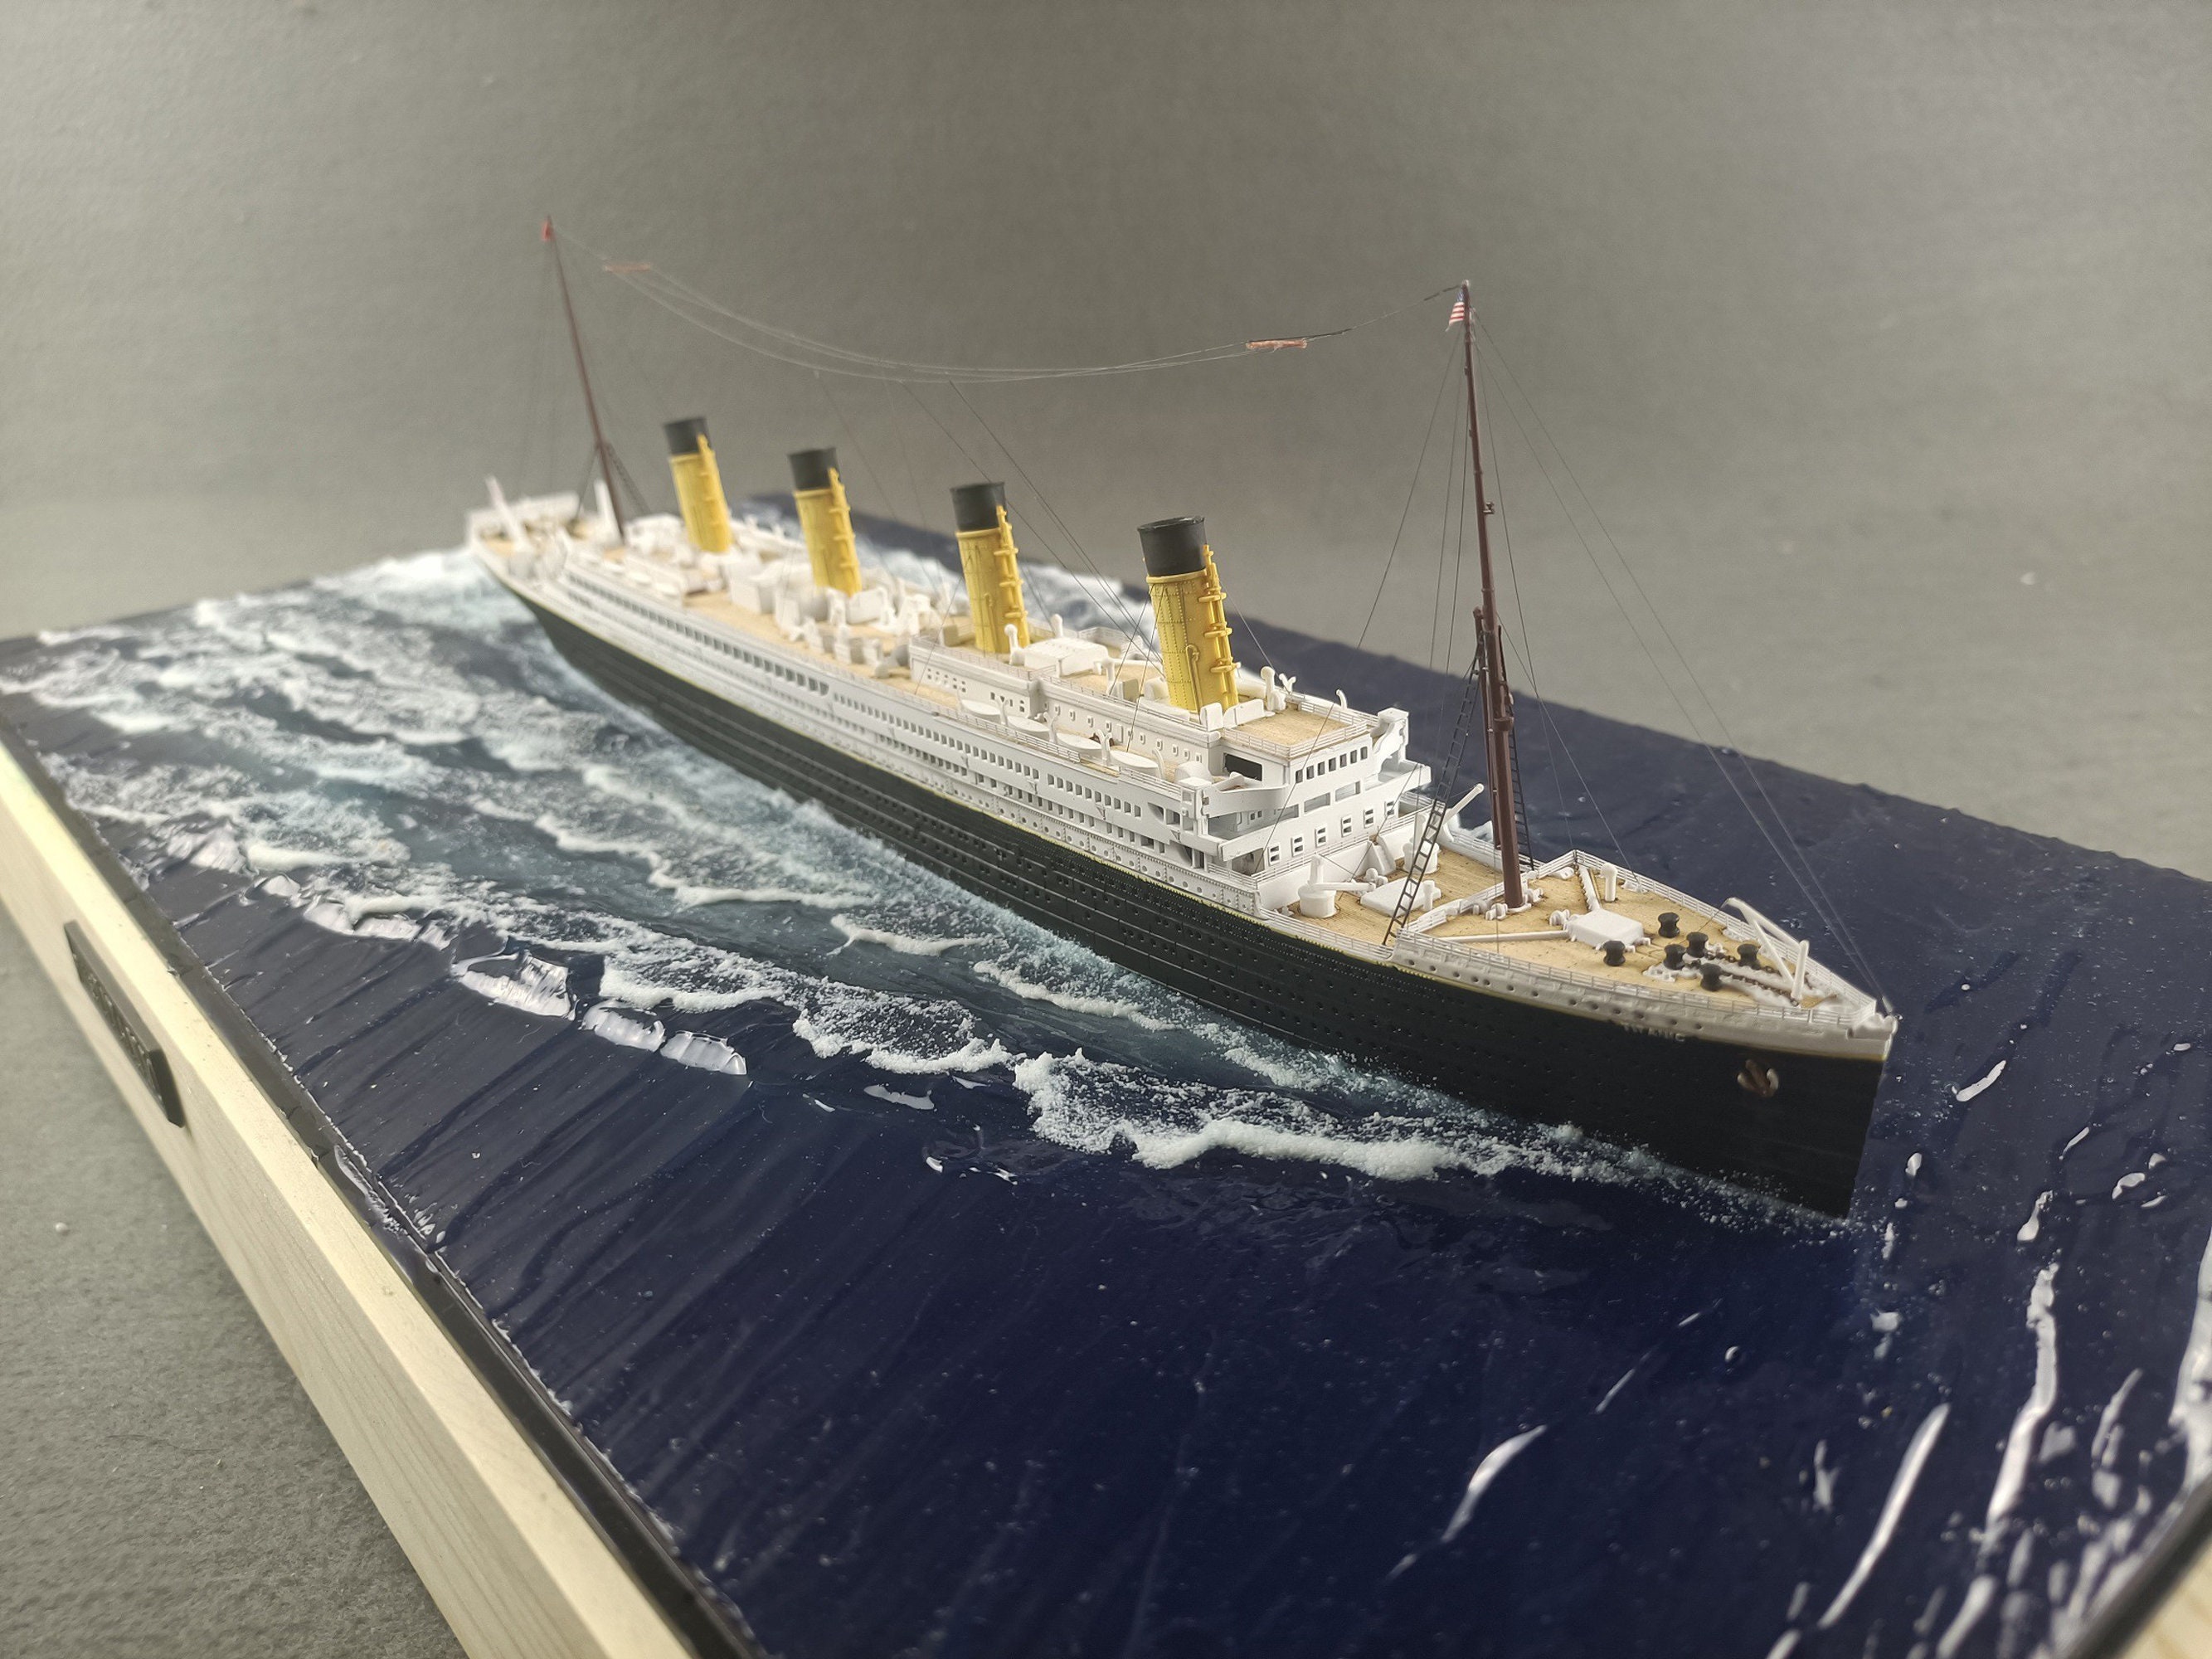 Rms Titanic Model Scale Handmade Resin Art Cruise Ship Etsy Uk My XXX